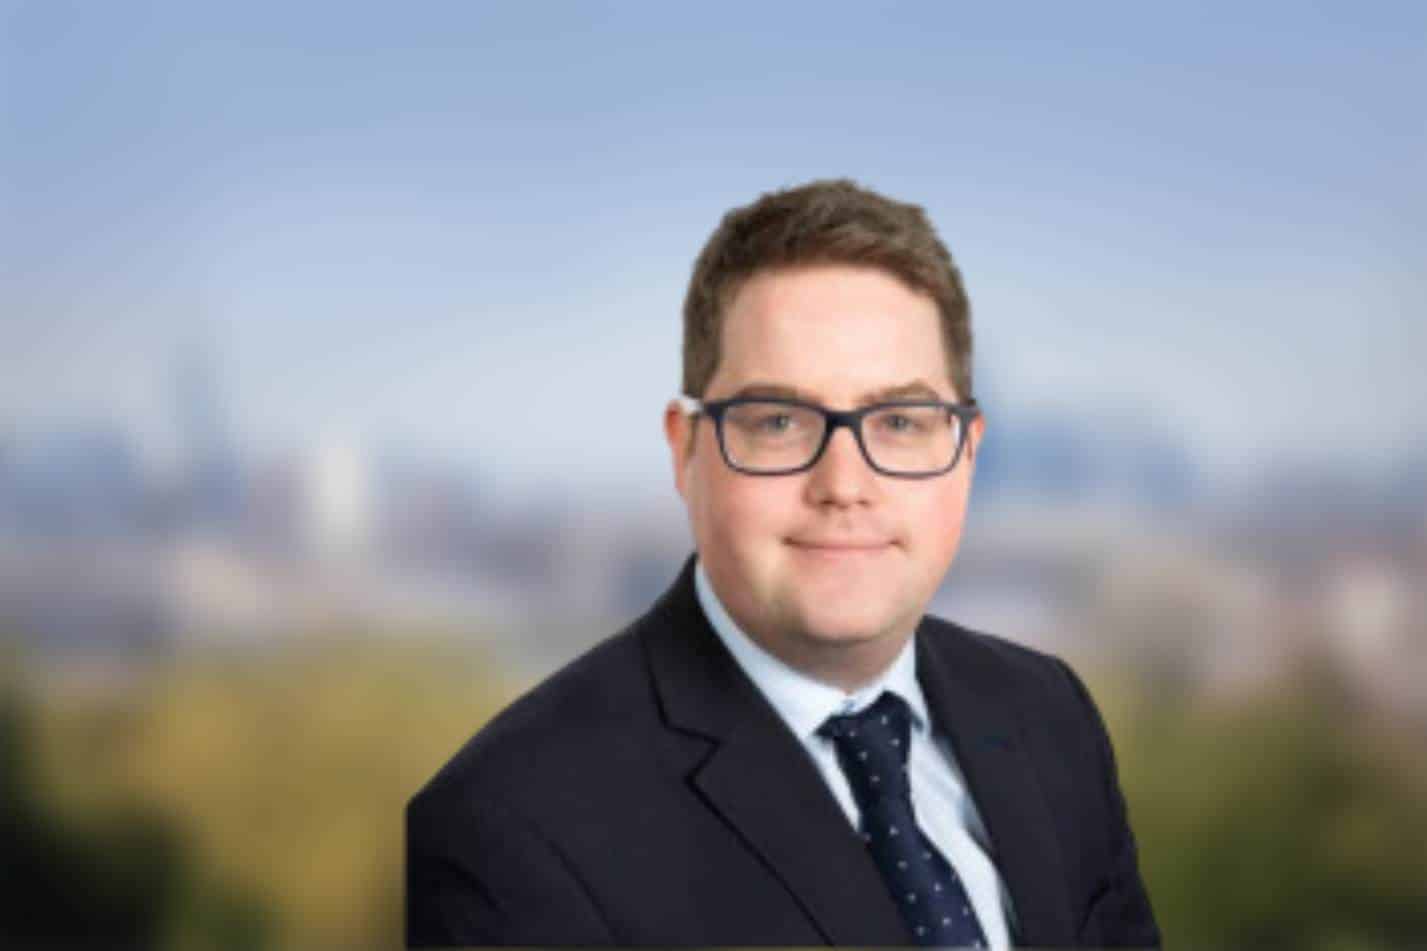 Aaron Kenny Banking & Finance Partner solicitor at Spencer West